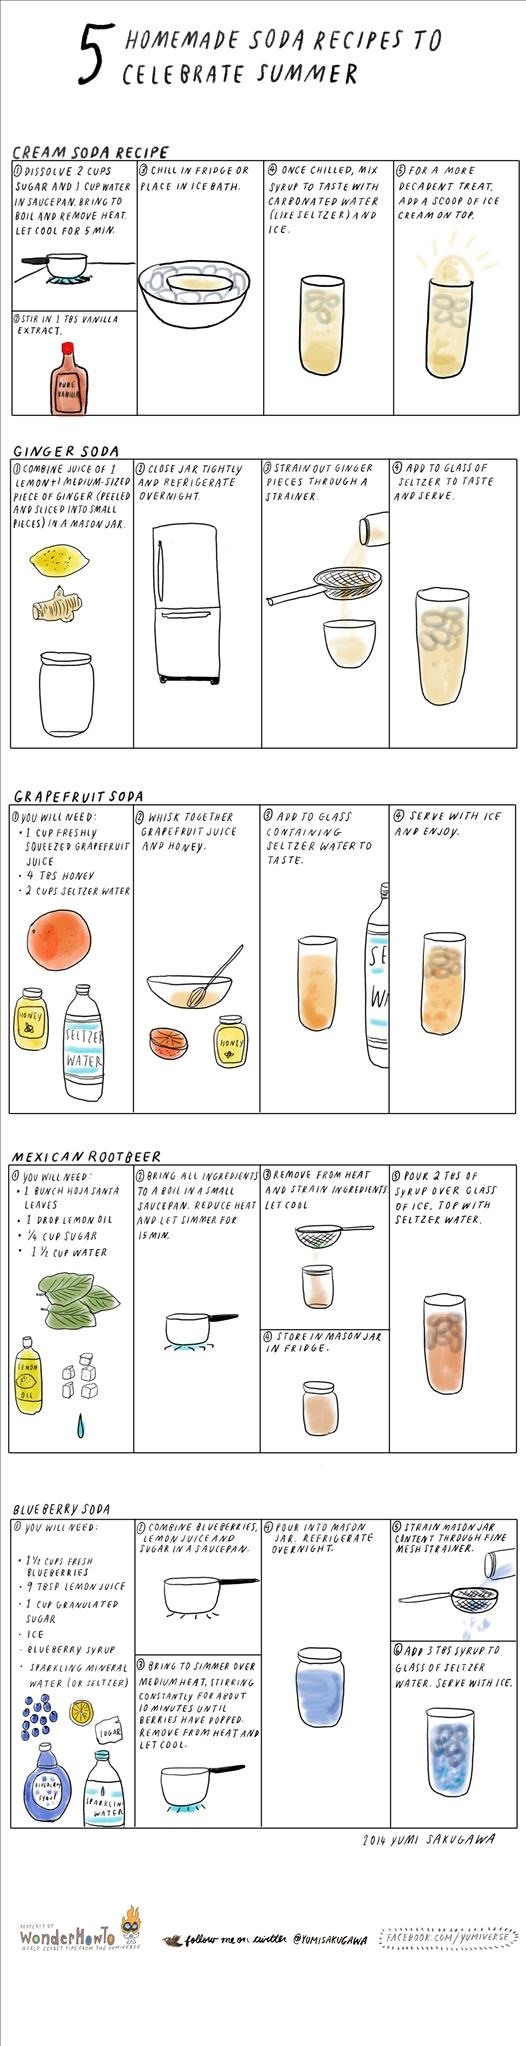 5 Delicious & Easy Homemade Soda Recipes to Celebrate Summer